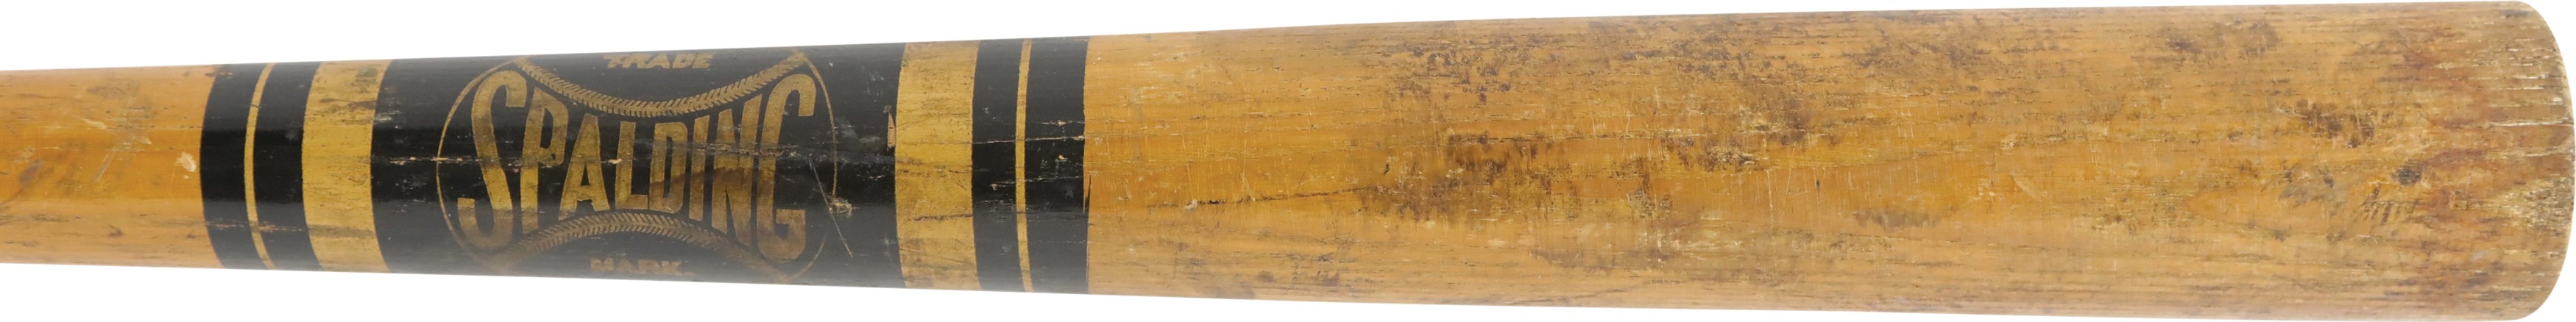 Baseball Memorabilia - 1884 Patent Spalding Baseball Bat